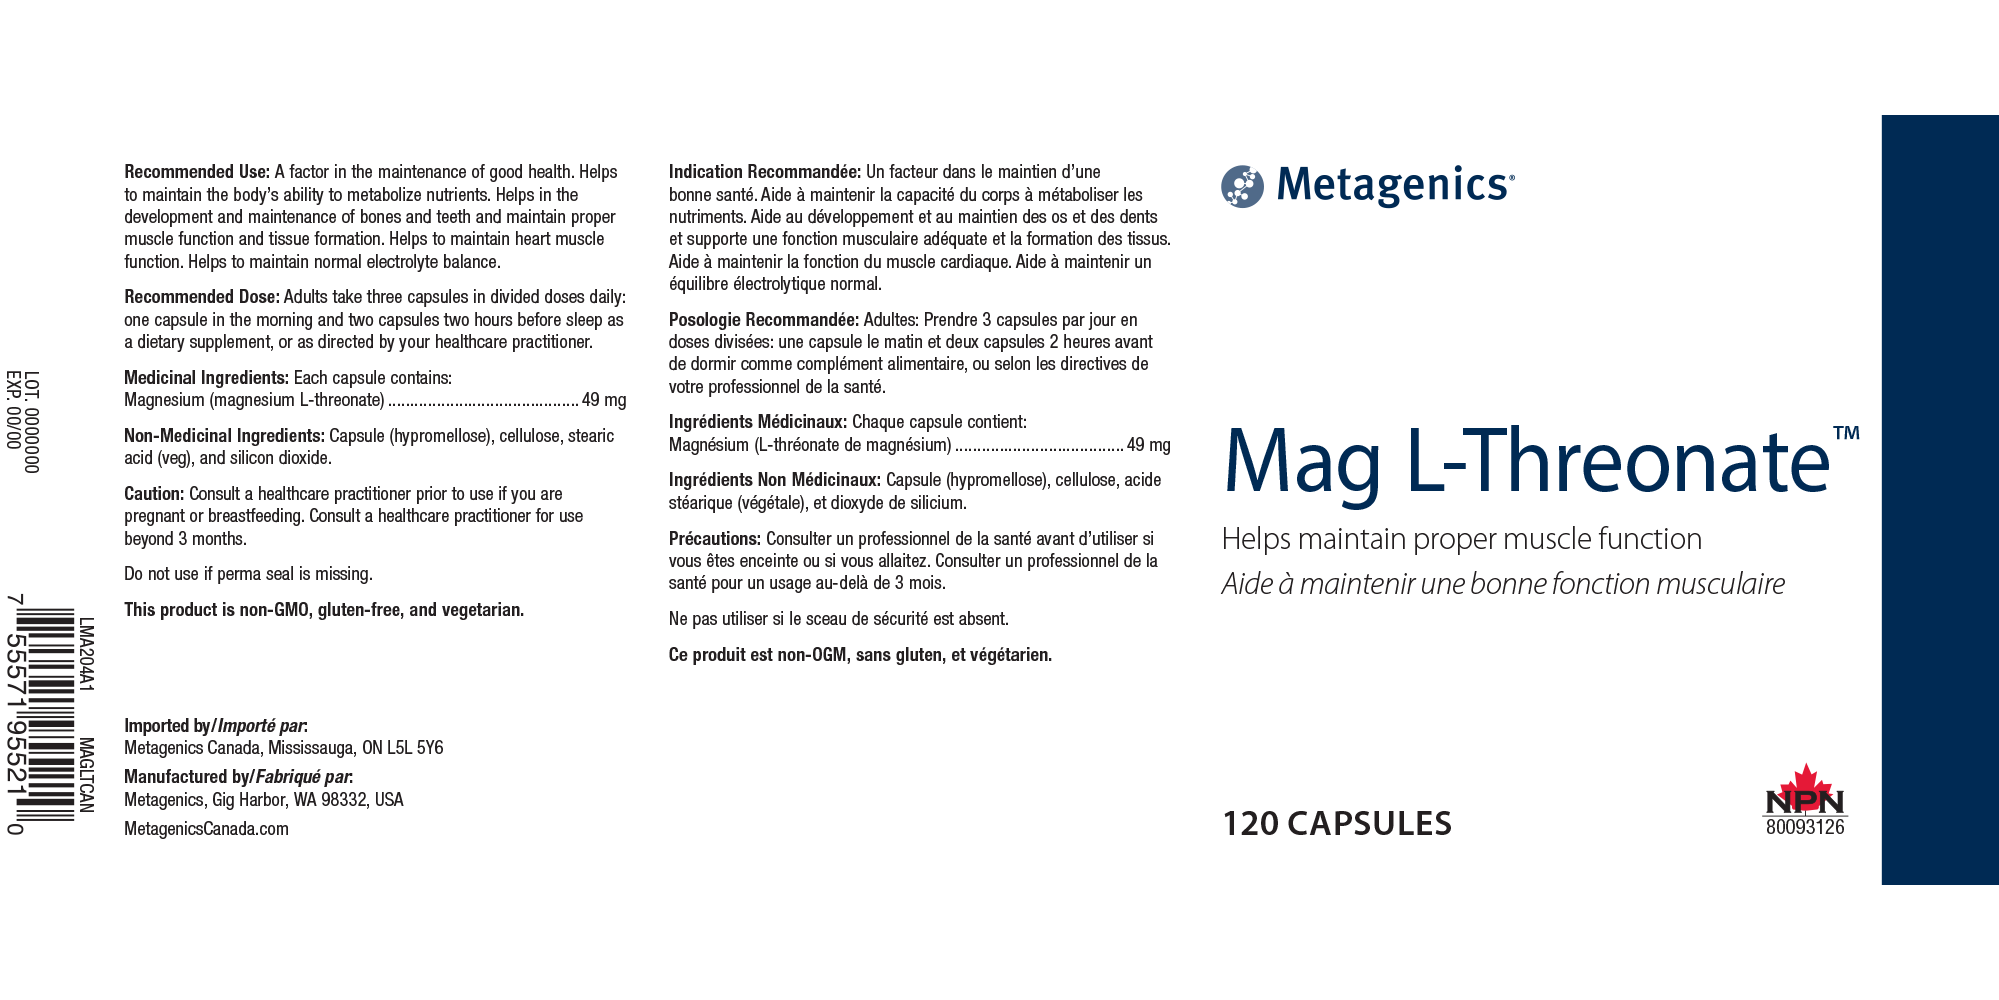 Metagenics Mag L-Threonate